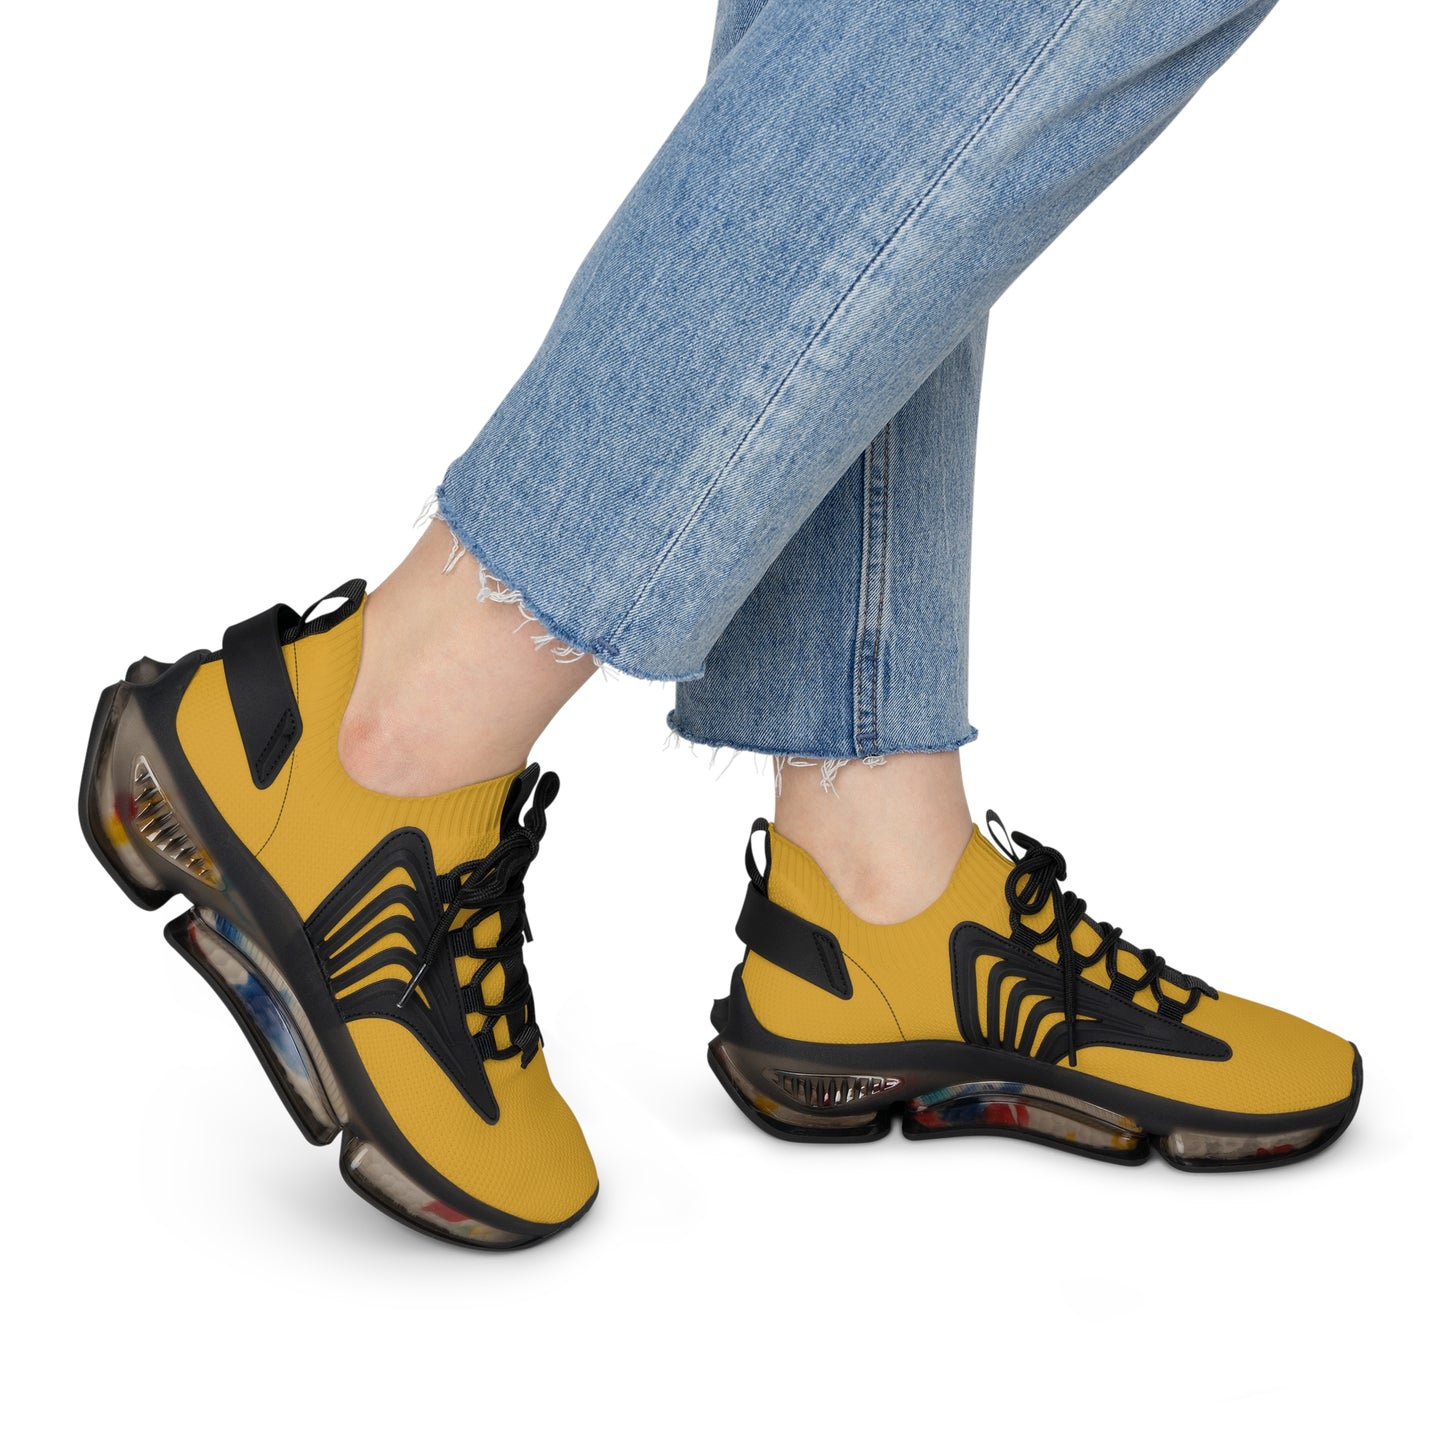 Autumn Yellow Women's Mesh Sneakers